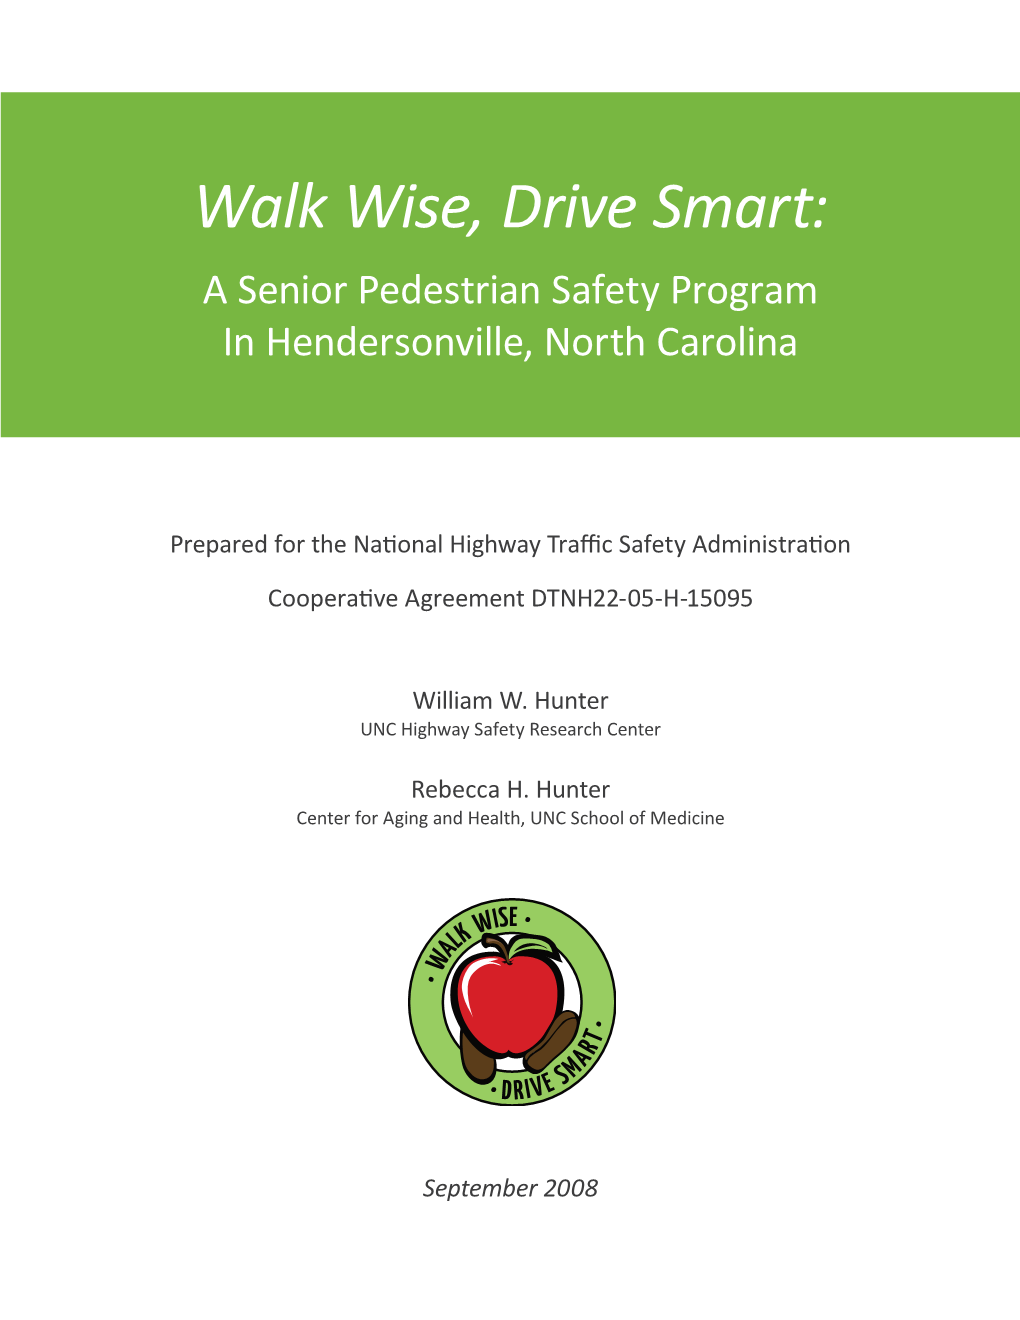 Walk Wise, Drive Smart: a Senior Pedestrian Safety Program in Hendersonville, North Carolina